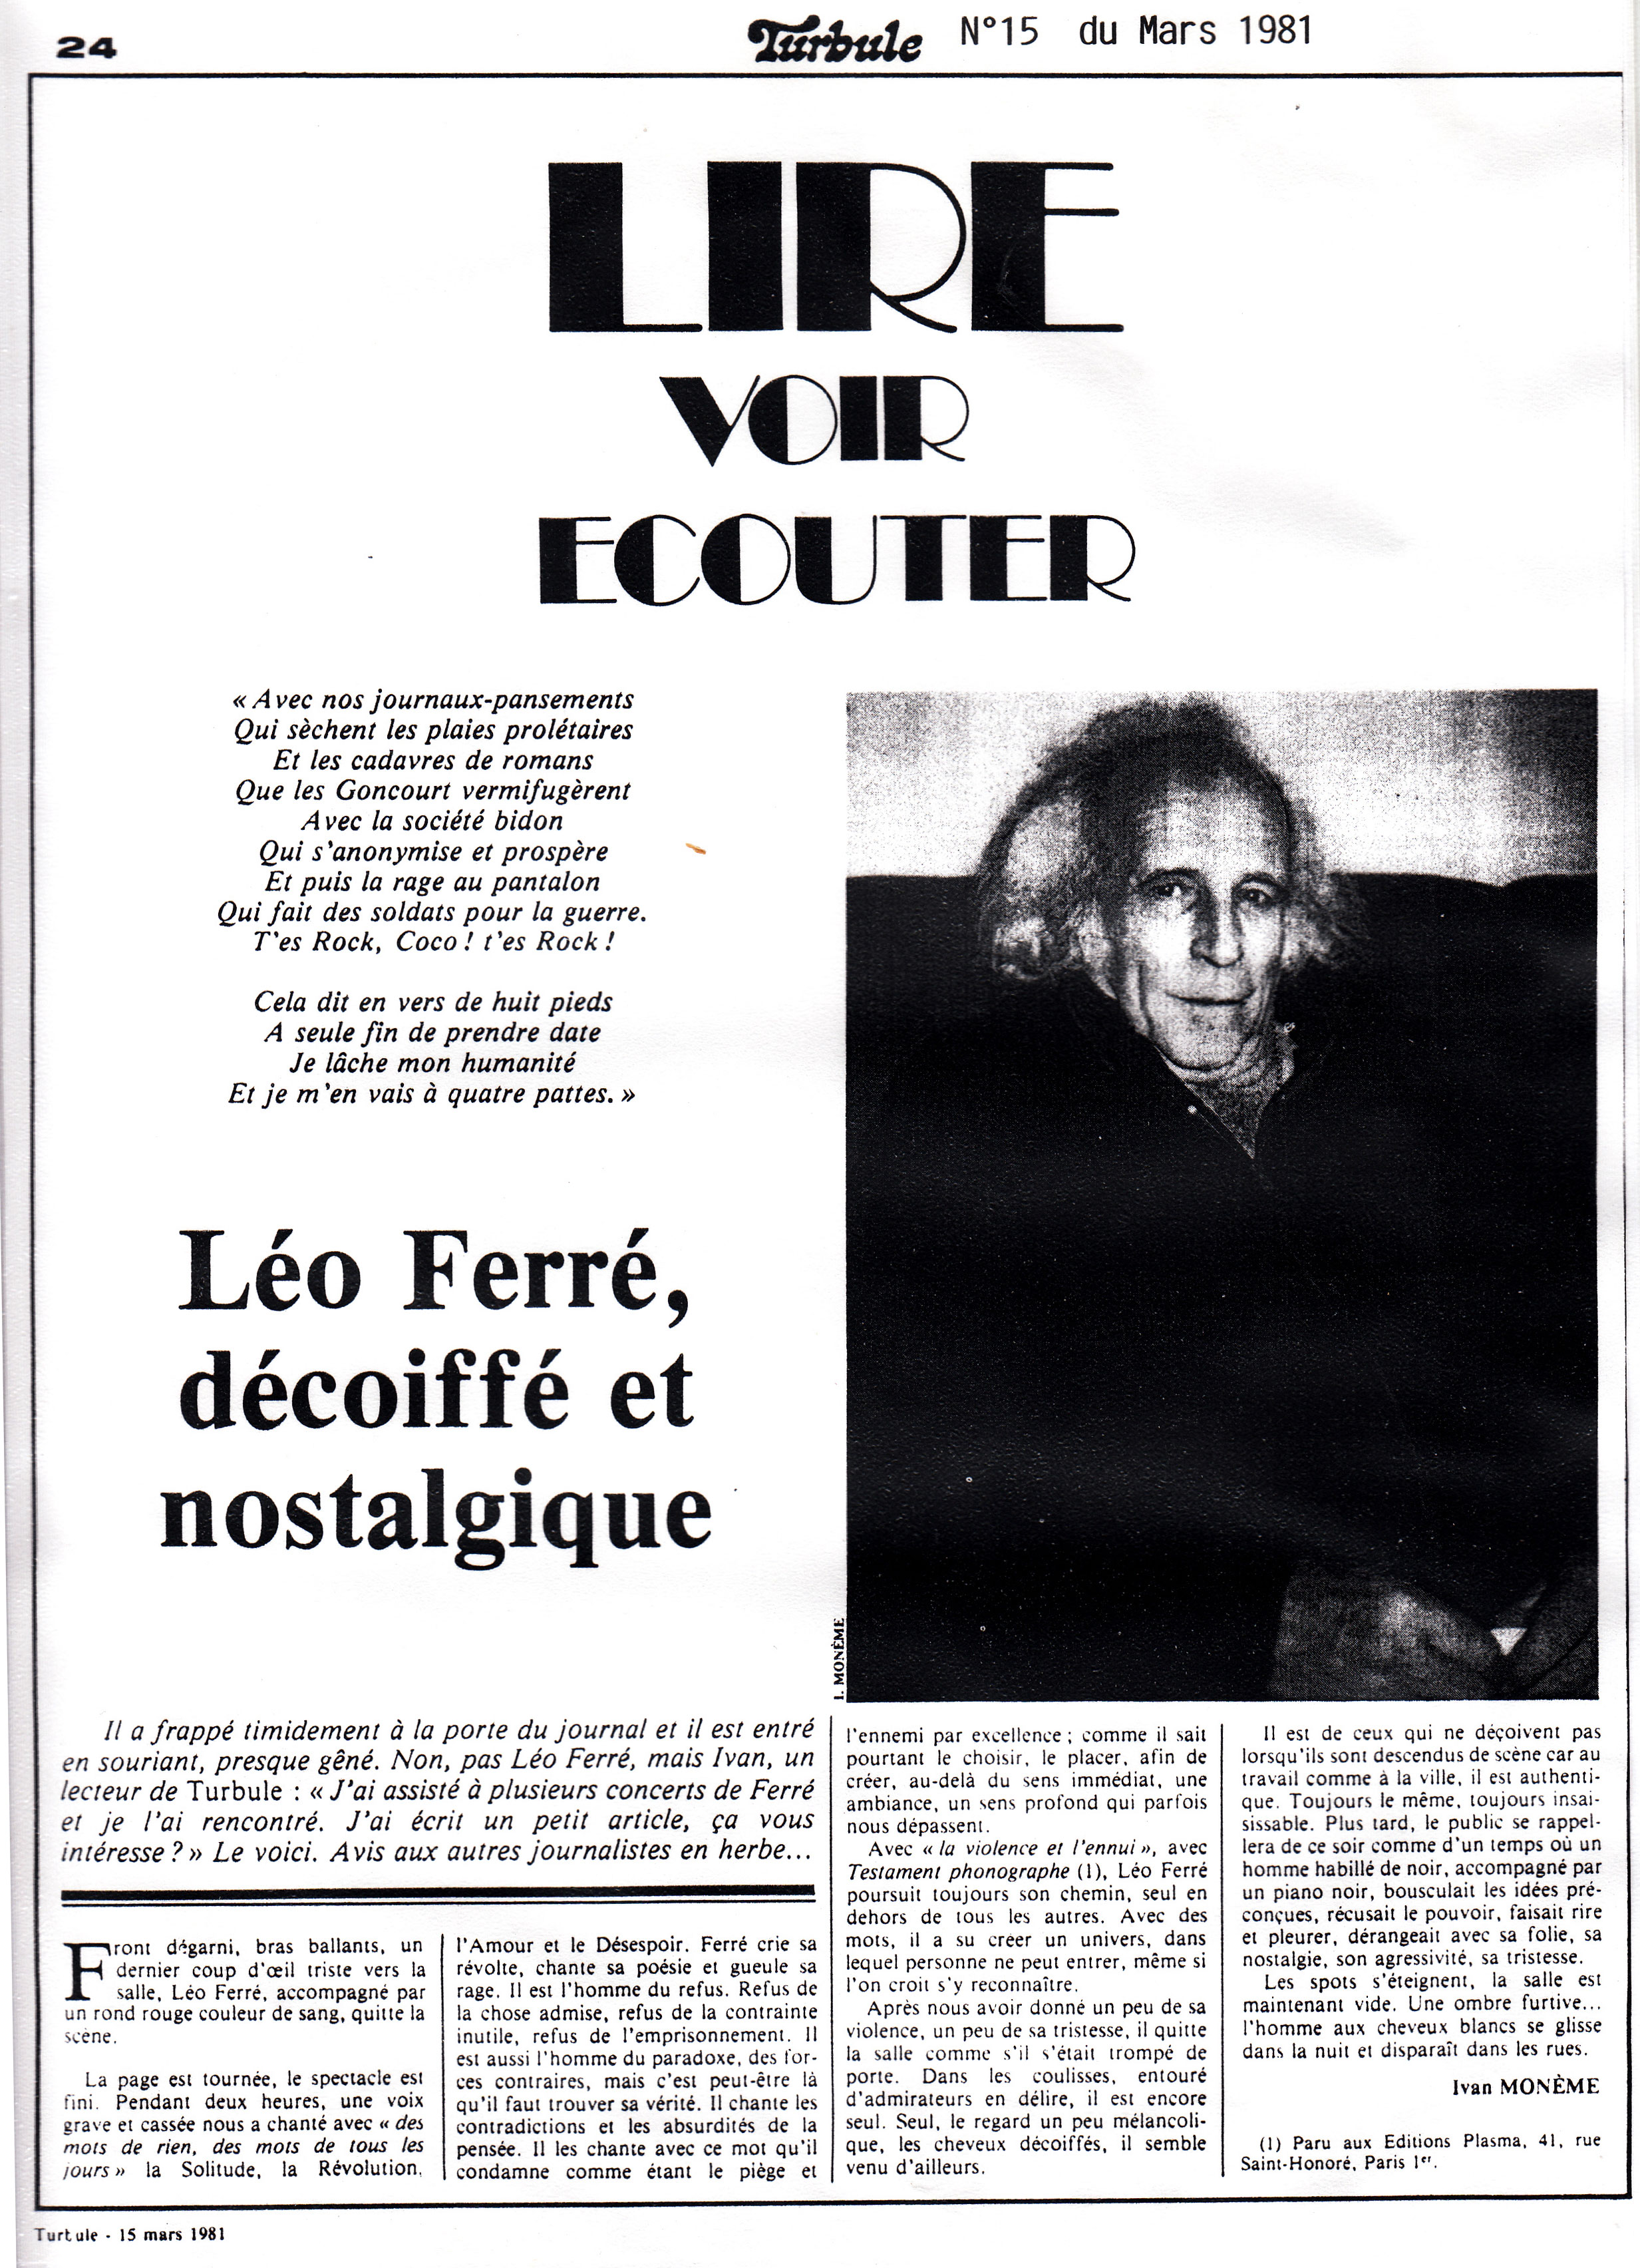 Léo Ferré - Turbule n°15 de mars 1981